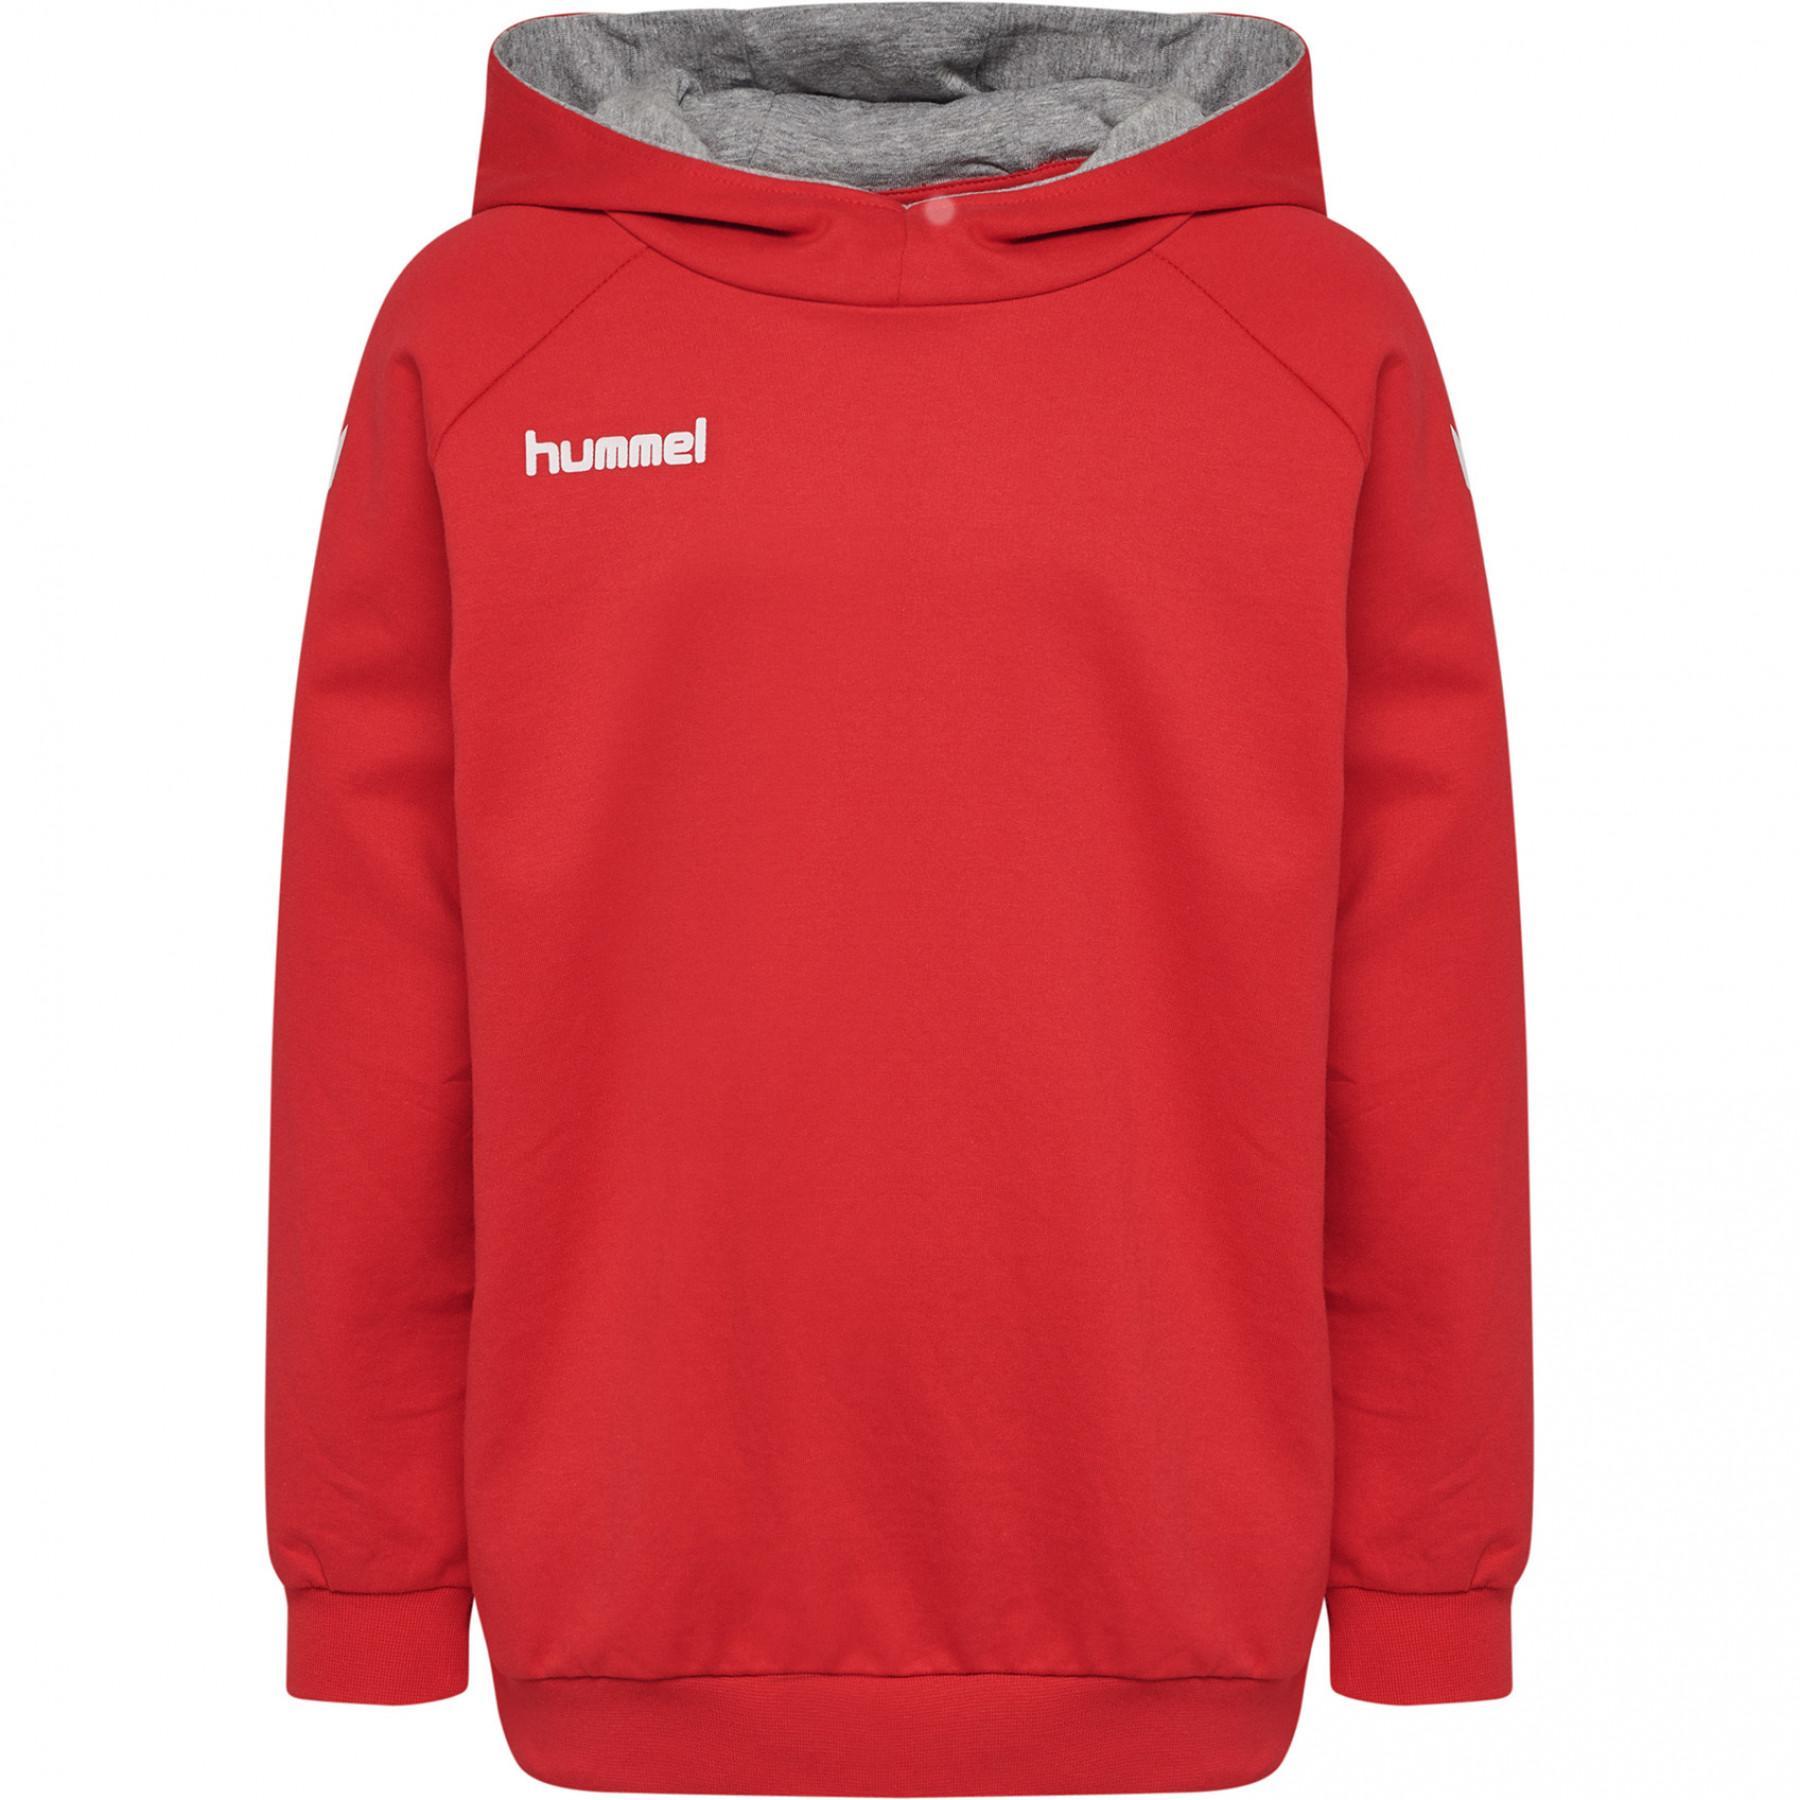 sweatshirt - hmlGO - Hooded Handball Men\'s children wear Sweatshirts cotton wear Hummel - for